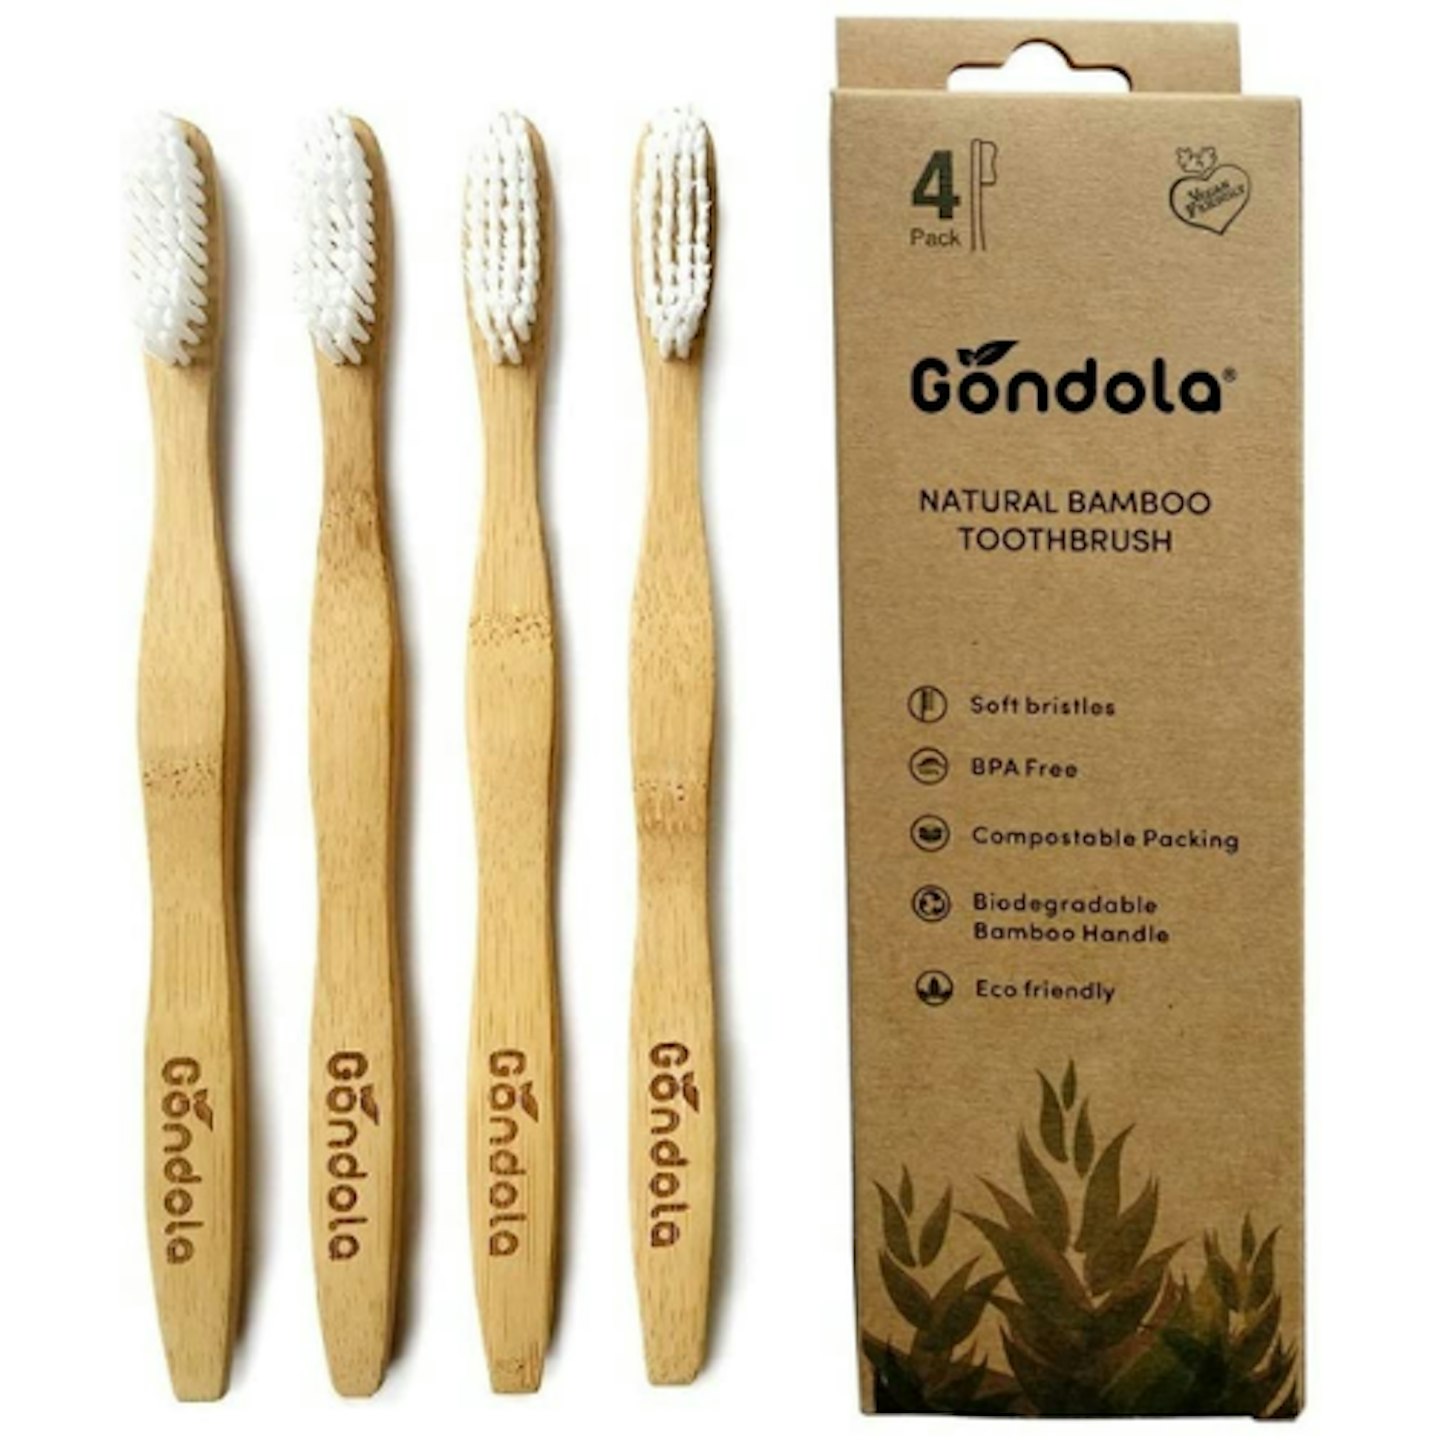 Gondola Organic Bamboo Toothbrushes, 4 Pack